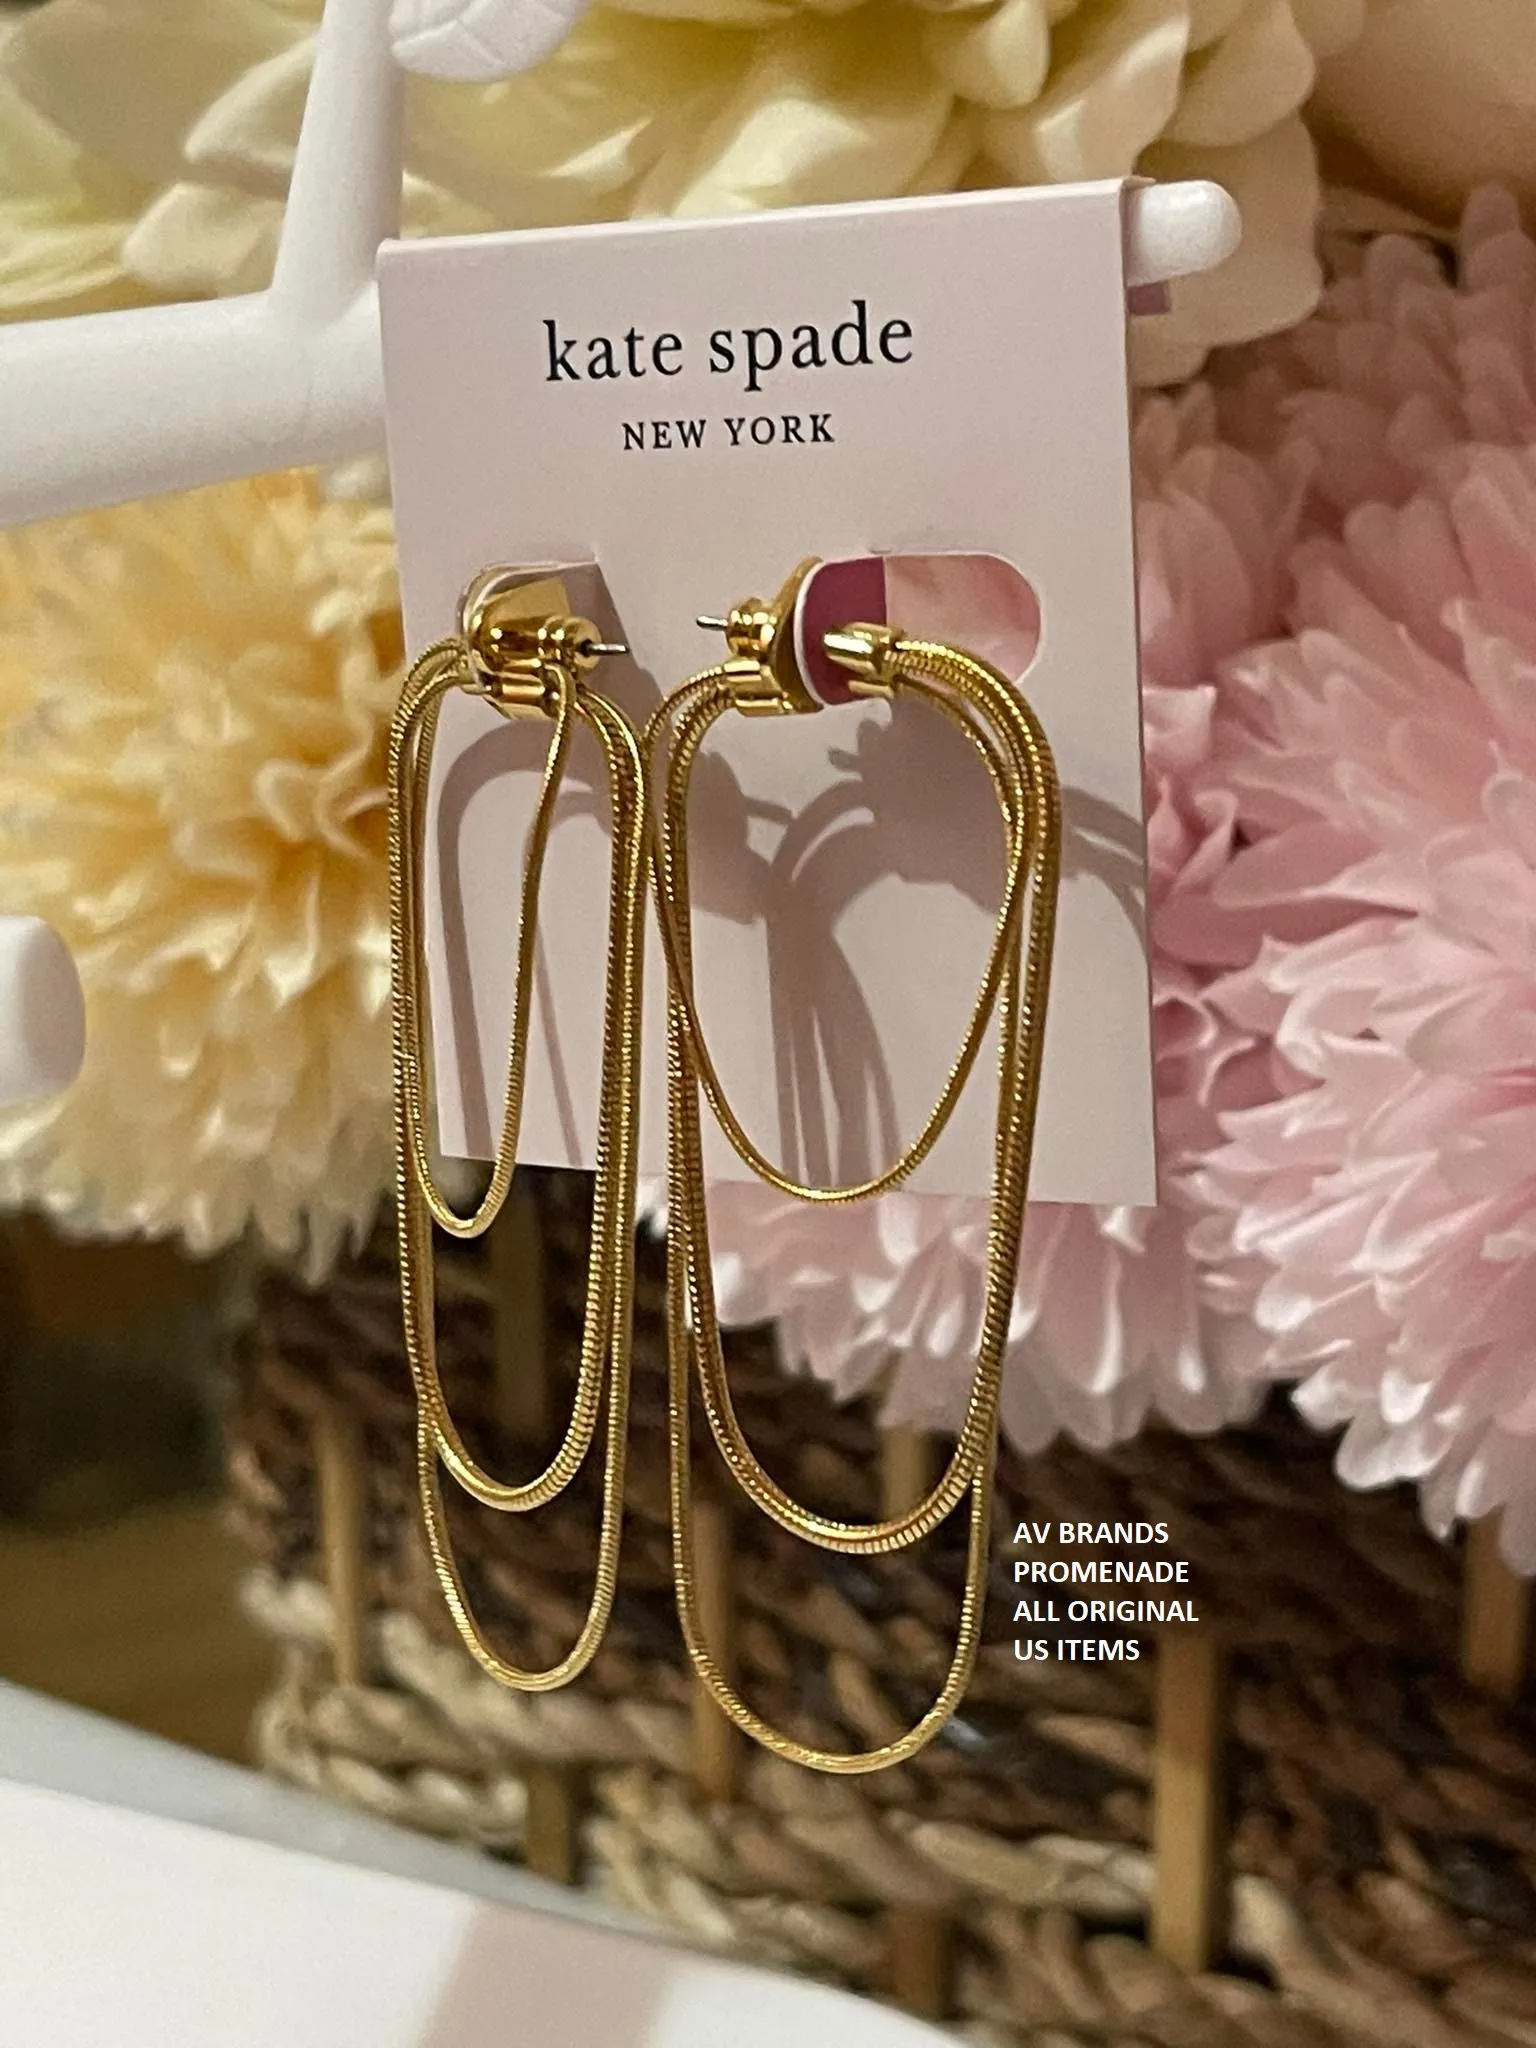 Original Kate Spade Know the Ropes Large Snake Chain Hoop Earrings Gold  Tone Earrings Dangling Earrings l AV Brands Promenade | Lazada PH